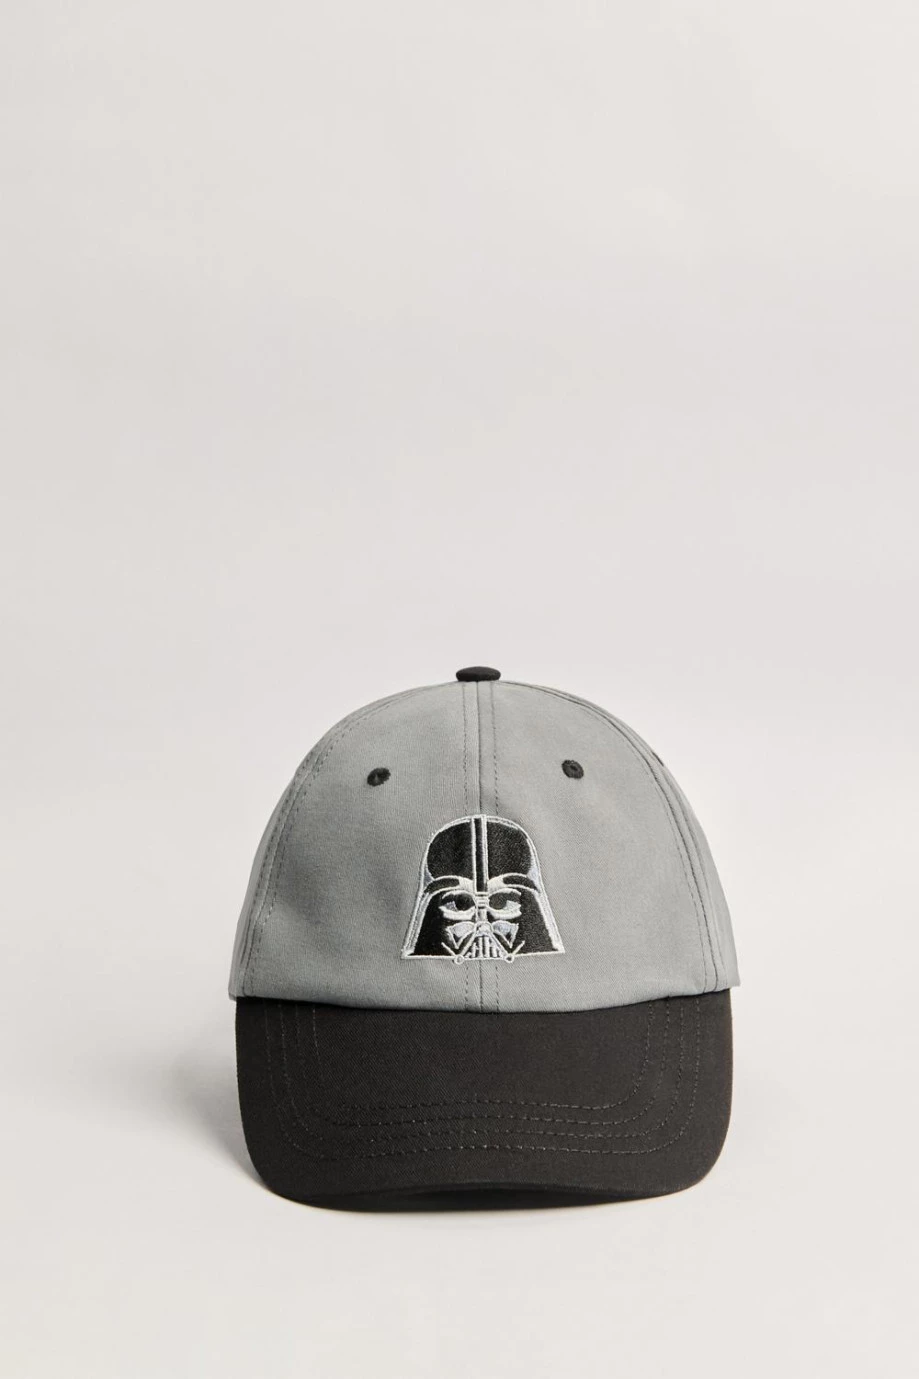 Cachucha beisbolera gris oscura con diseño de Star Wars